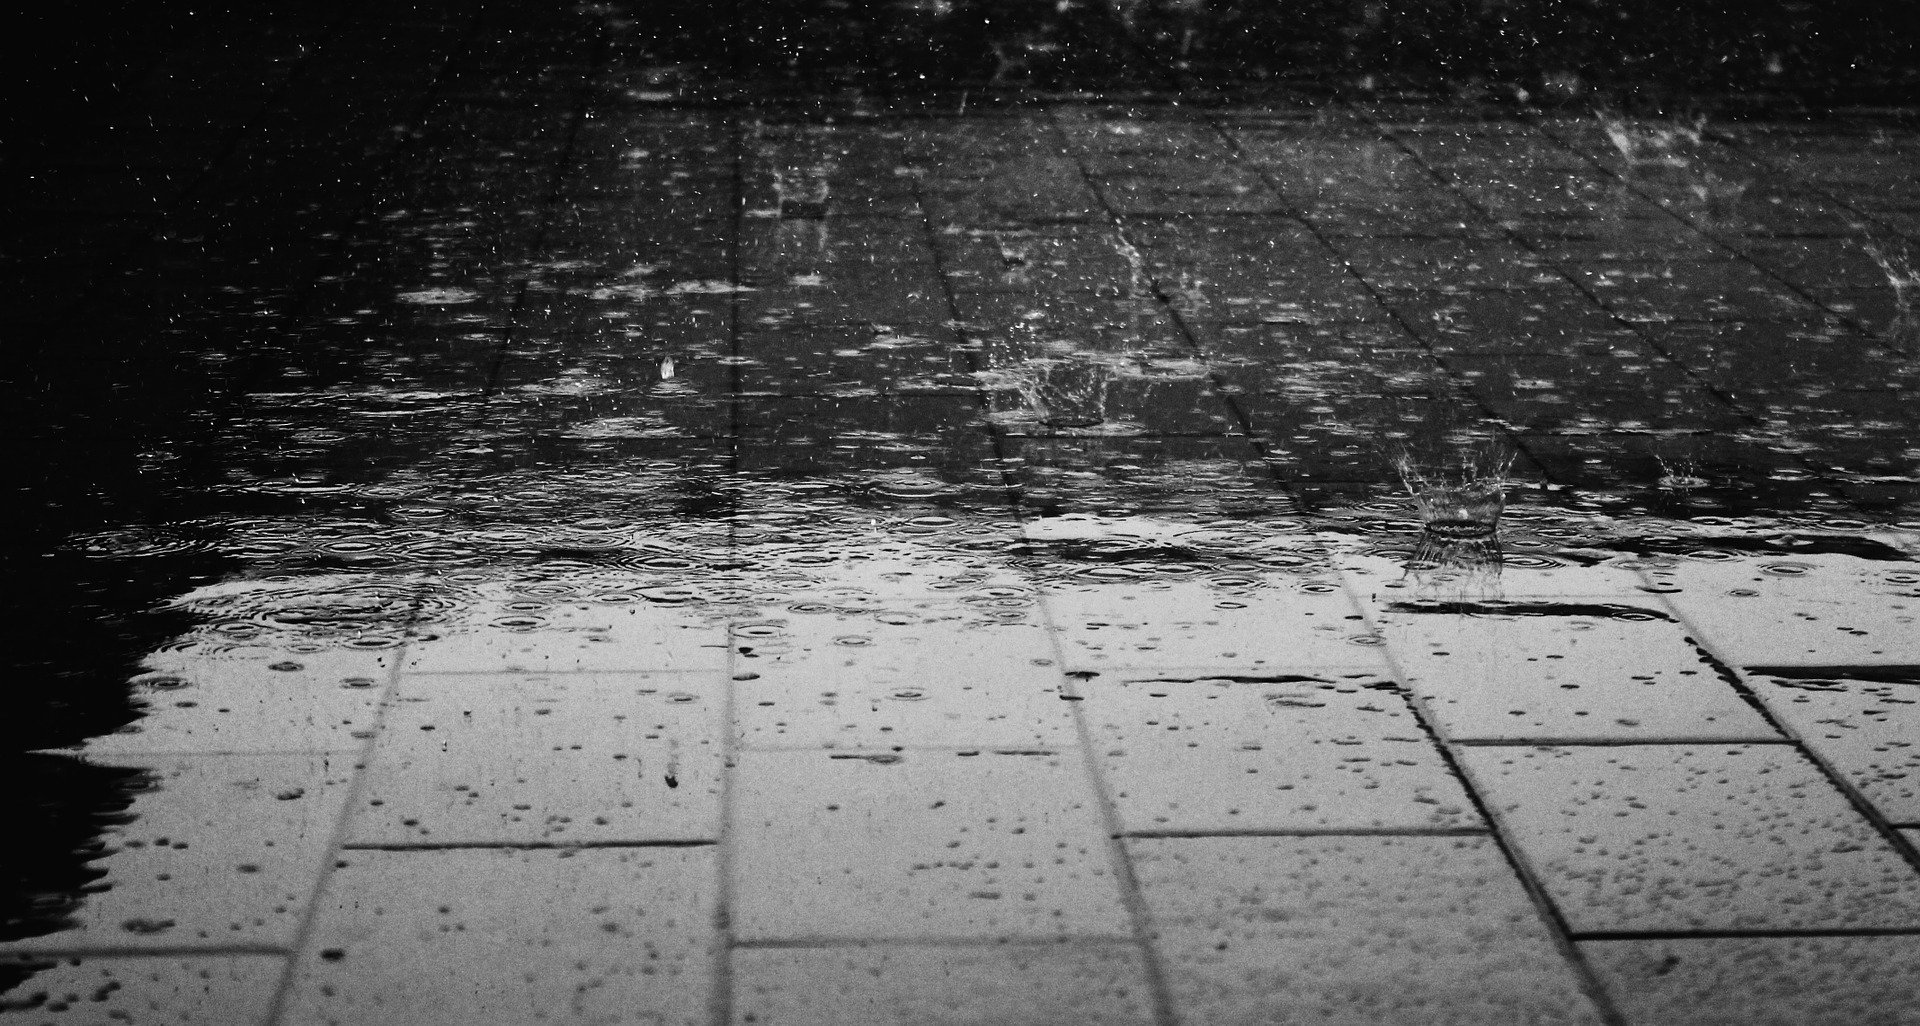 Raining on the stone pavement